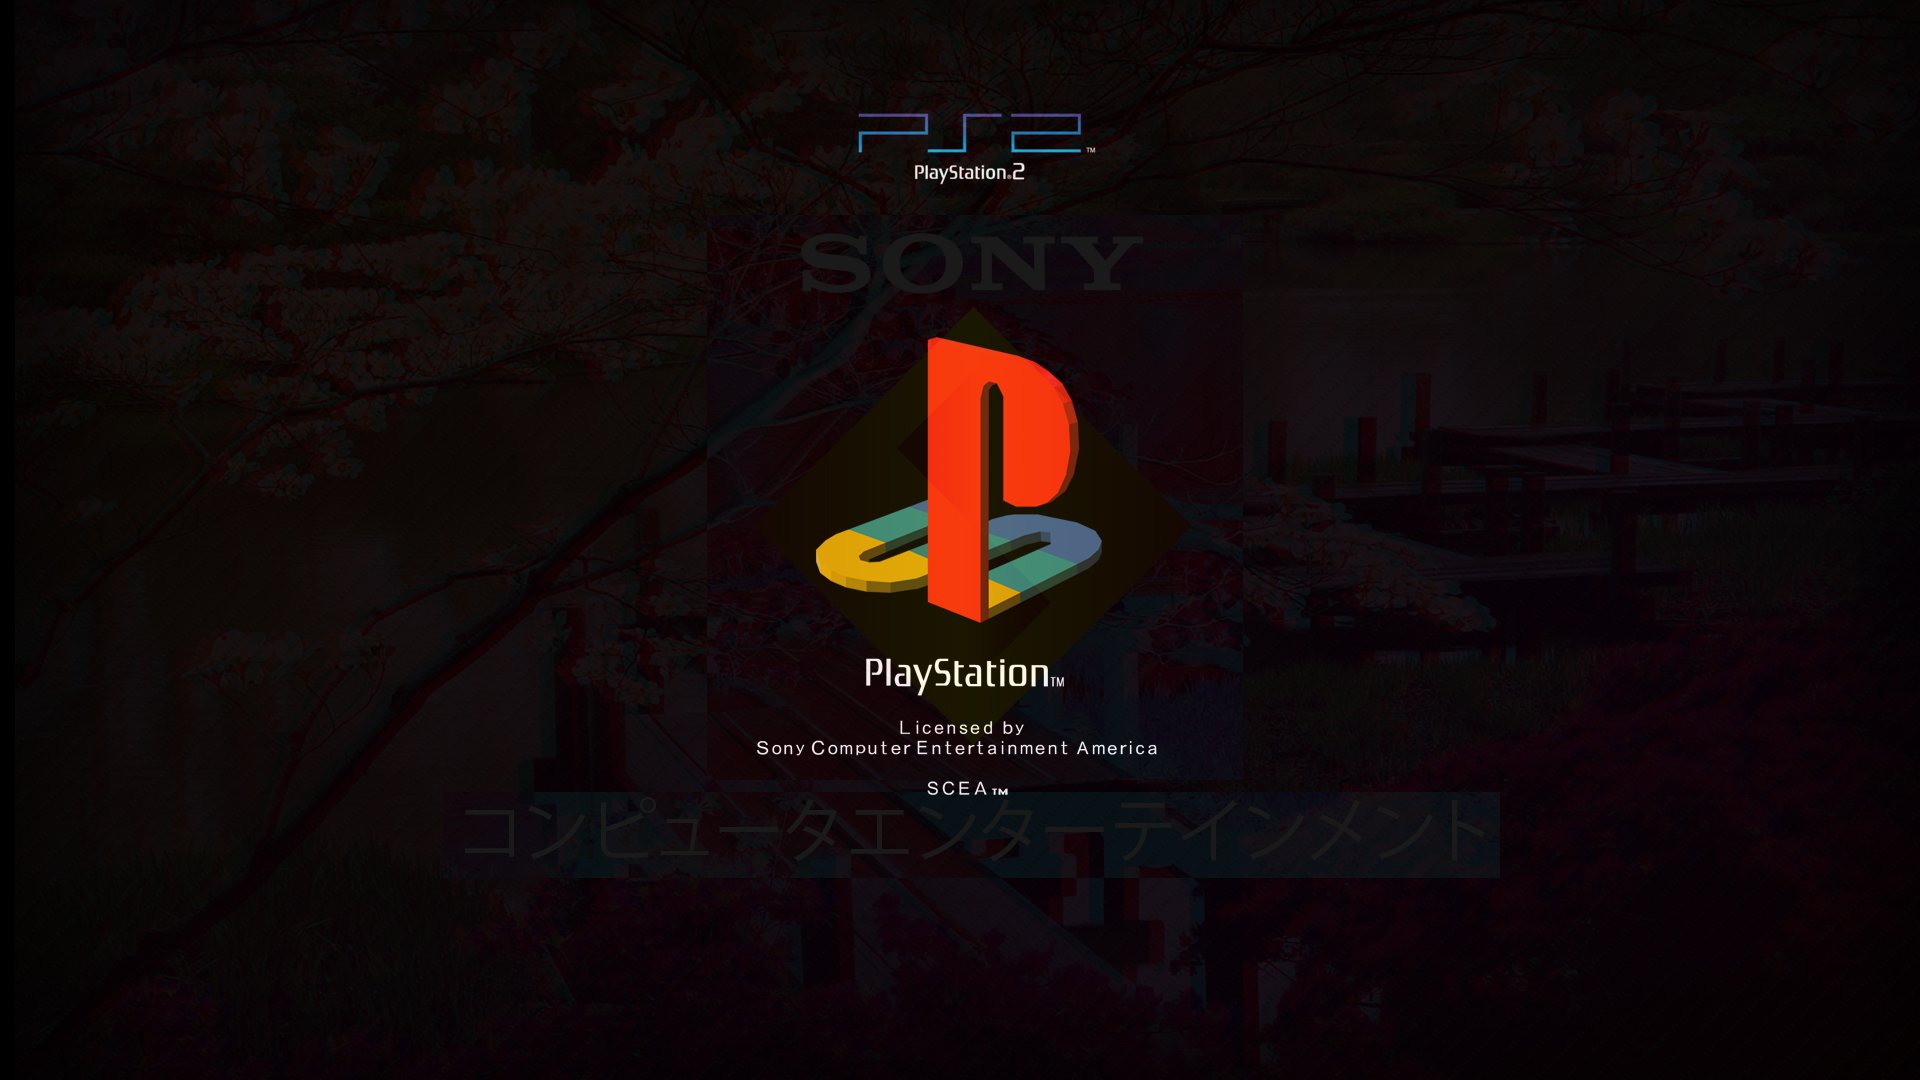 Play Station, Play Station 2, Sony, Vaporwave, Digital art, Video games, Logo, PlayStation Wallpaper